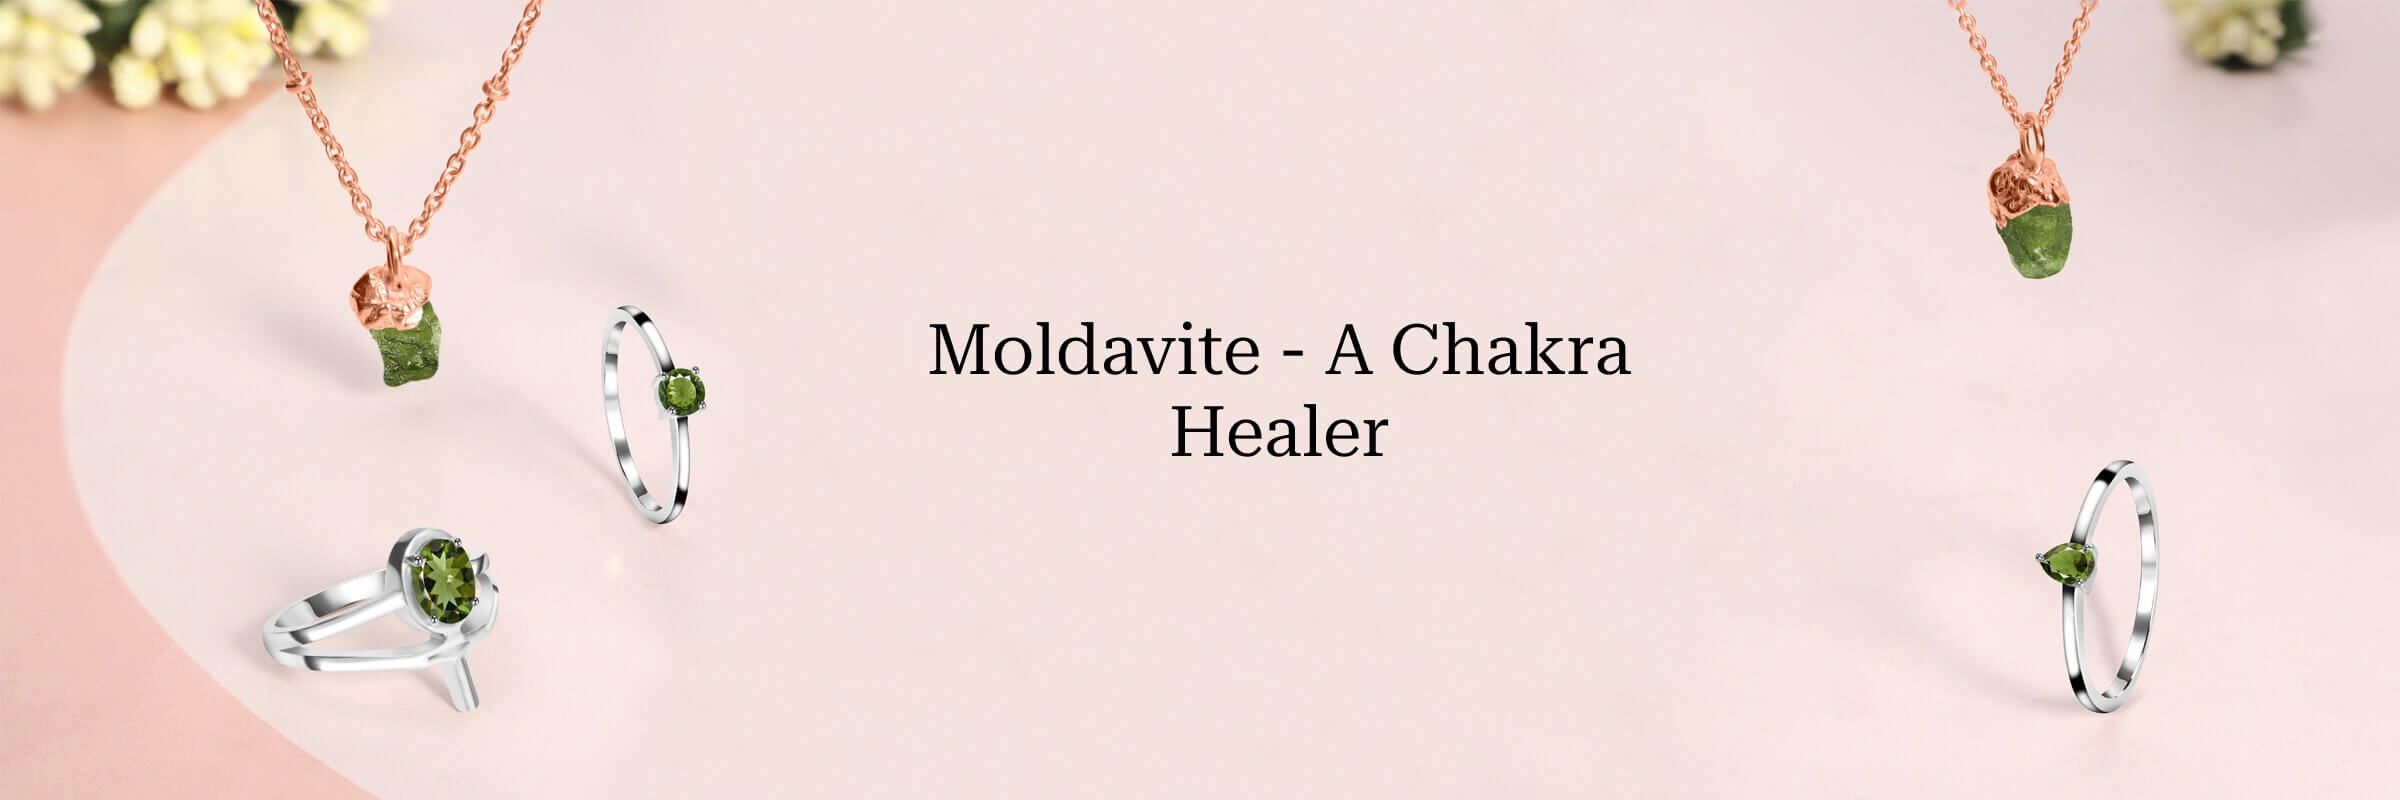 Chakra healing properties of Moldavite